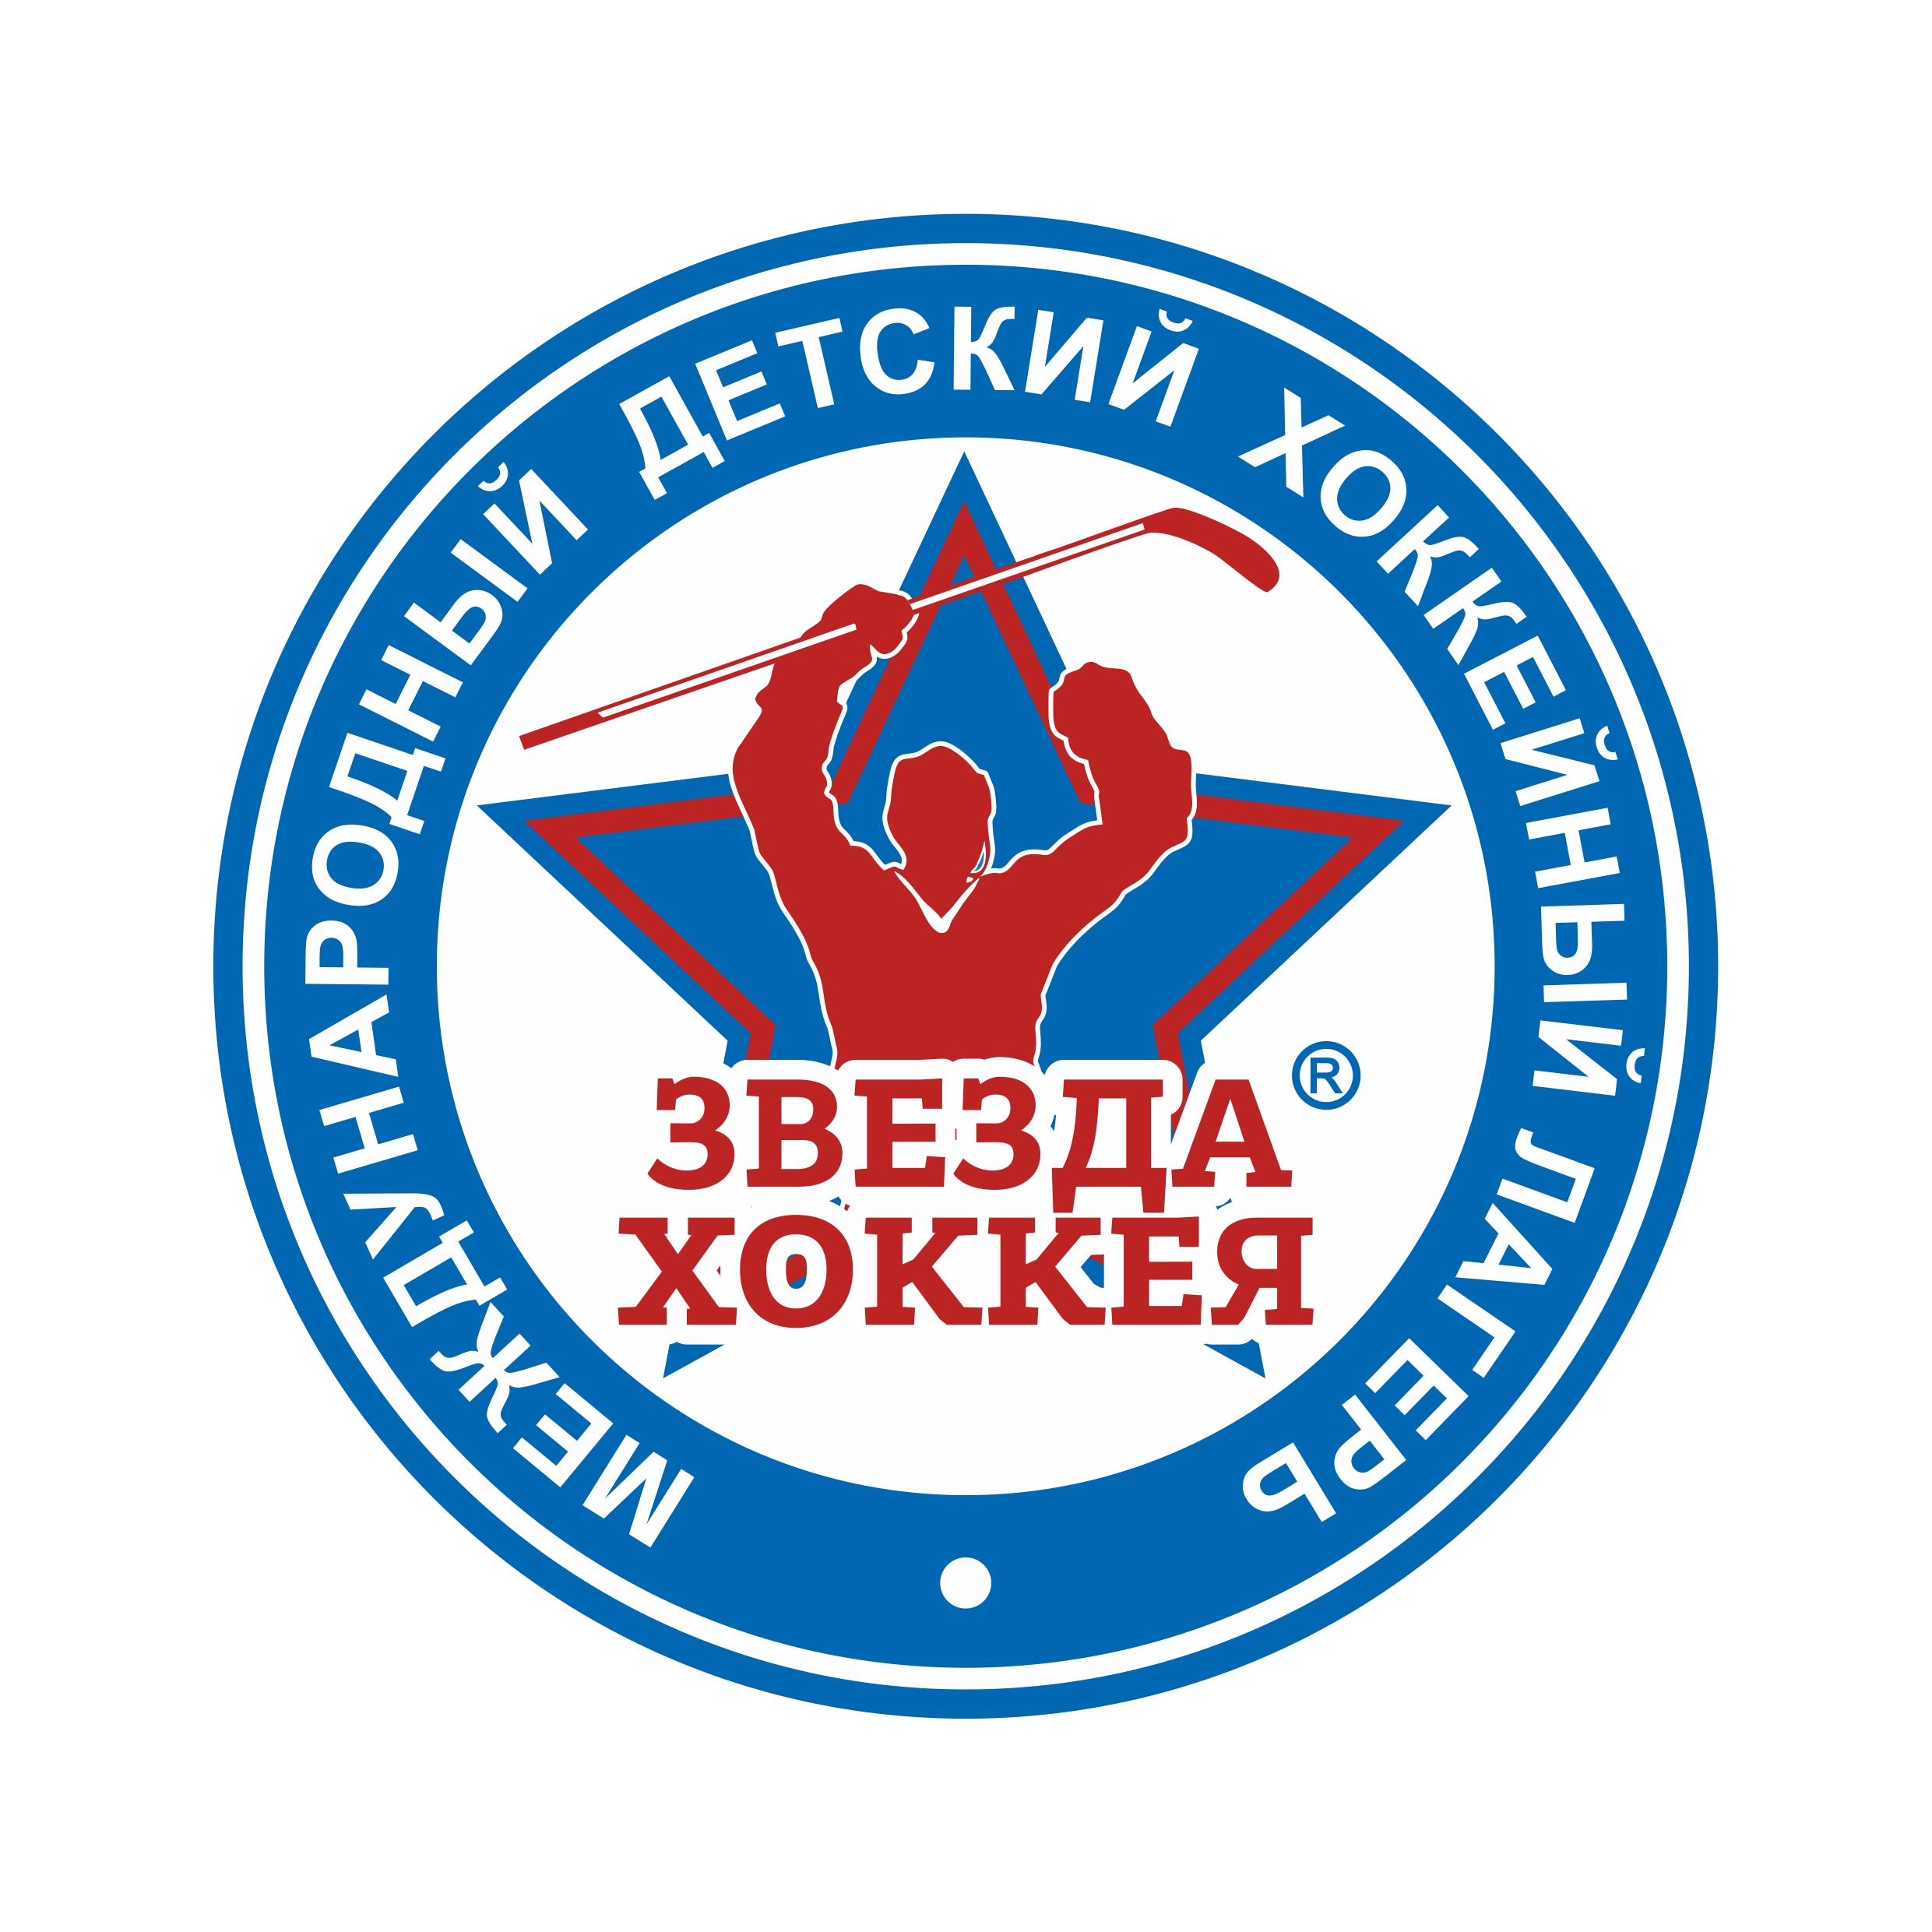 Звезда хоккея logo